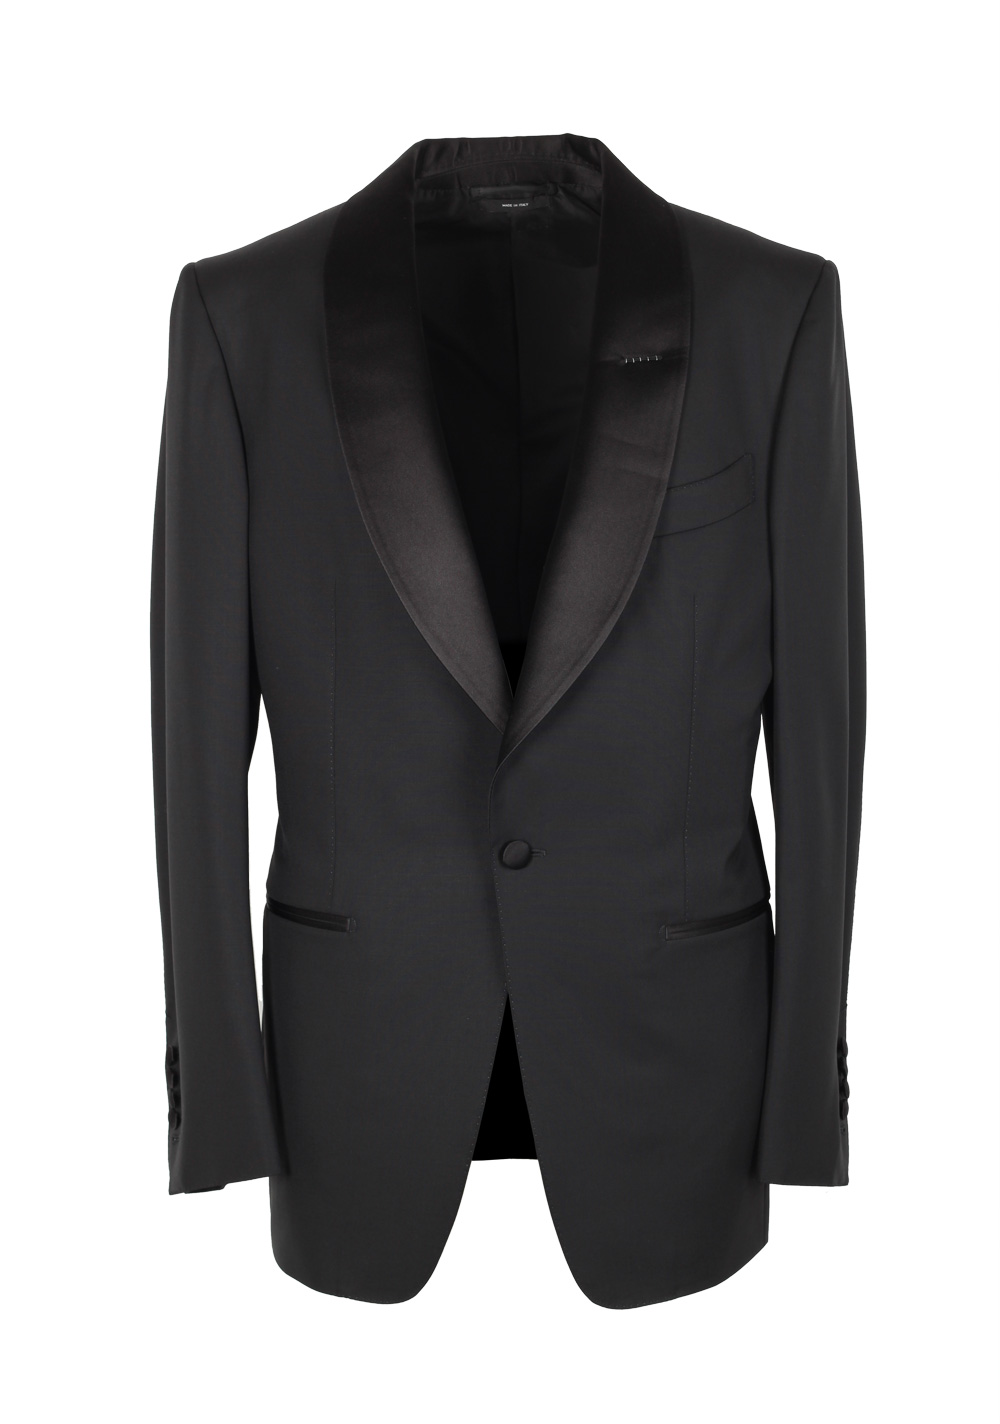 TOM FORD Windsor Shawl Collar Black Tuxedo Suit Smoking Size 48 / 38R U ...